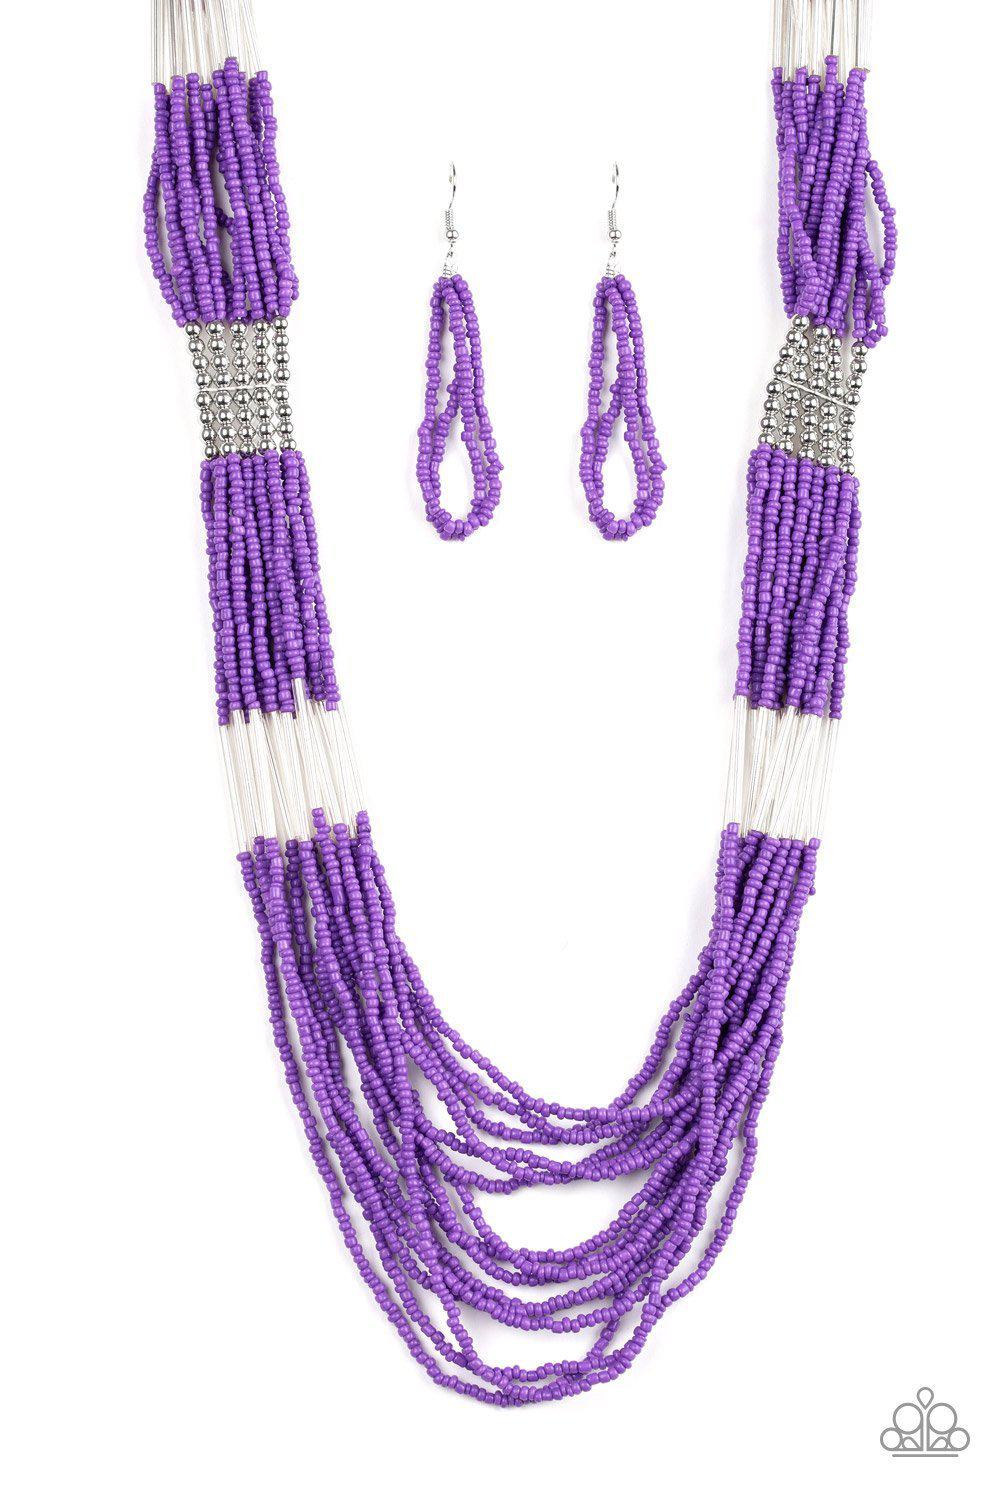 Amazon.com: YAXINRUI 33 Inch 7 mm Metallic Purple Bead Necklaces, 15pcs  Mardi Gras Beads Bulk Round Beaded Necklaces Costume Necklace for Mardi  Gras Party Christmas Festive Events, Party Favors : Arts, Crafts